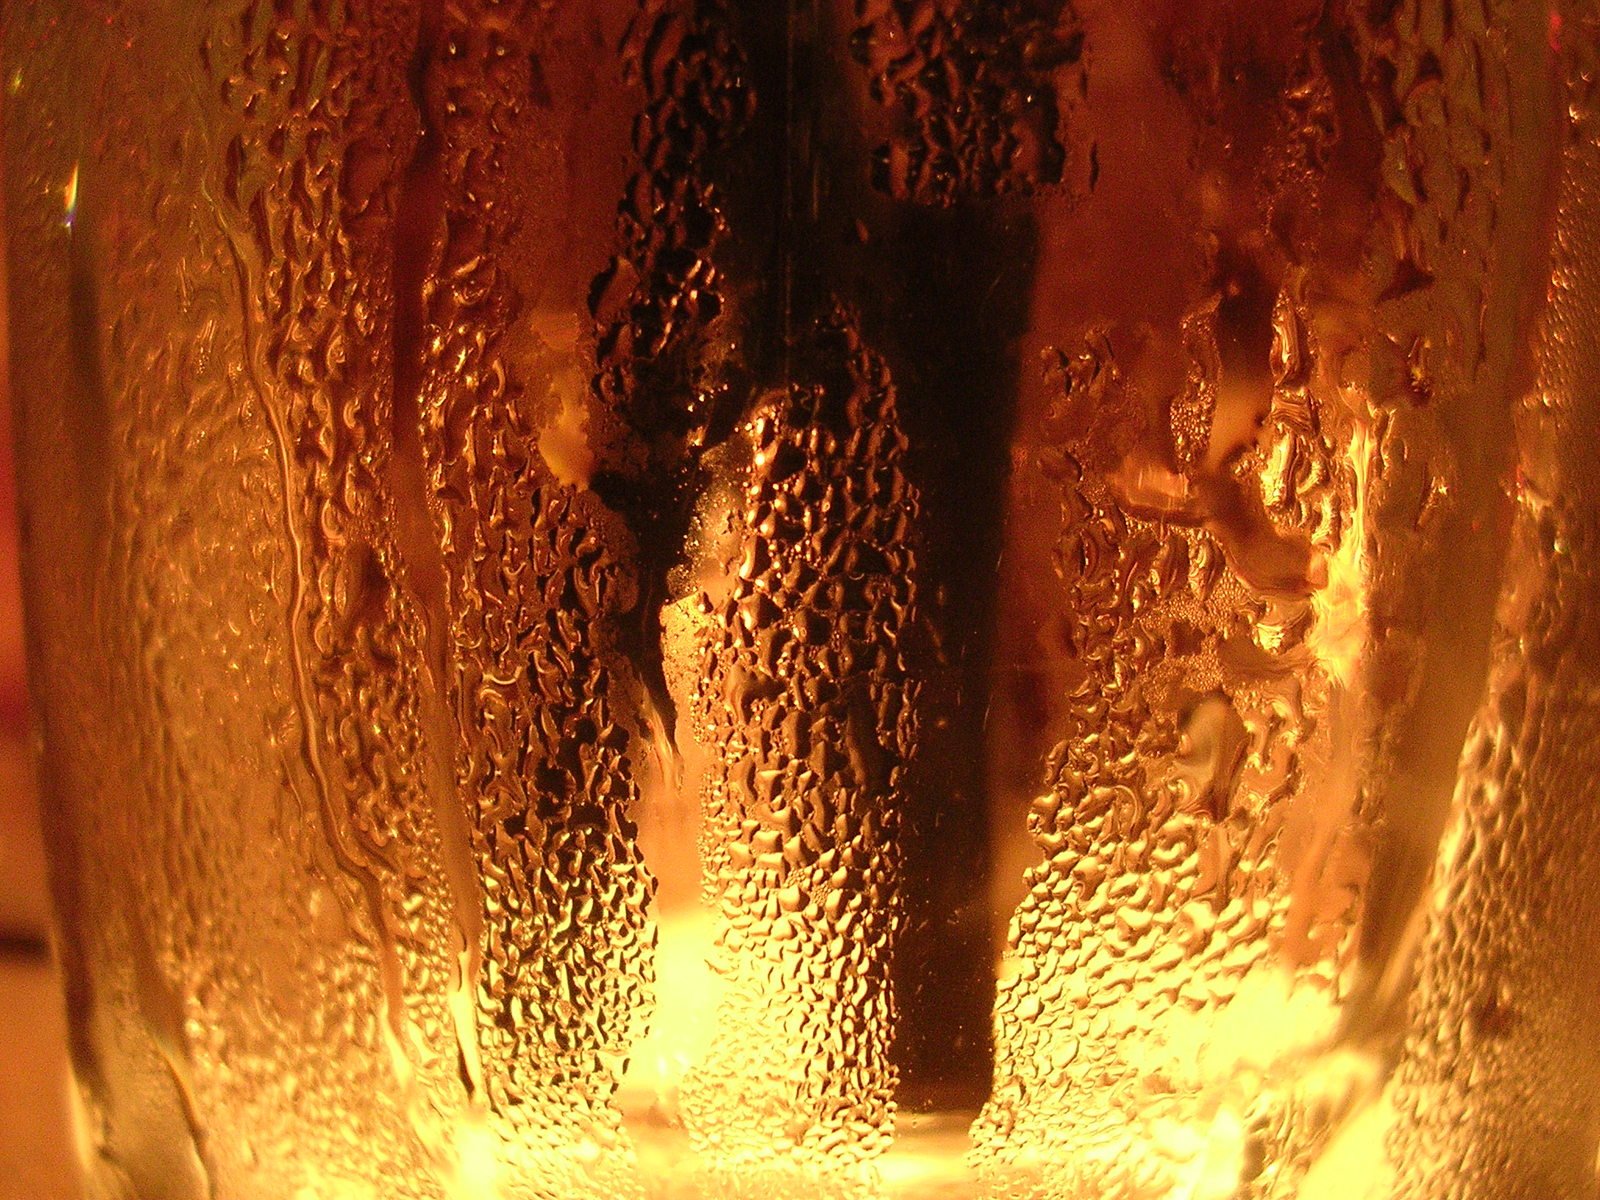 an image of a close up s of a jar